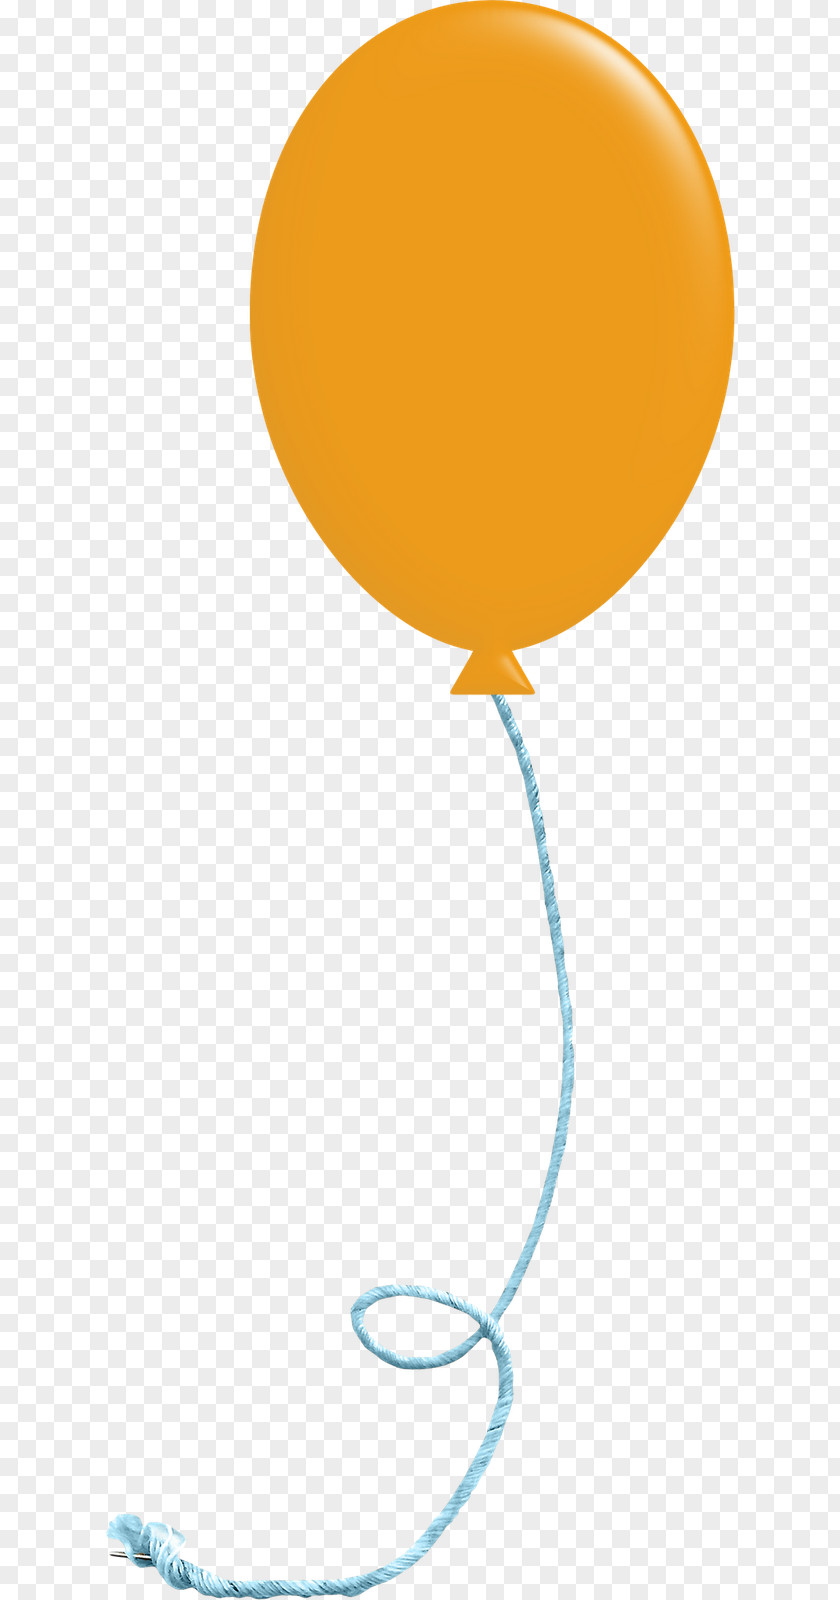 Balloon Clip Art Gift Birthday Children's Party PNG